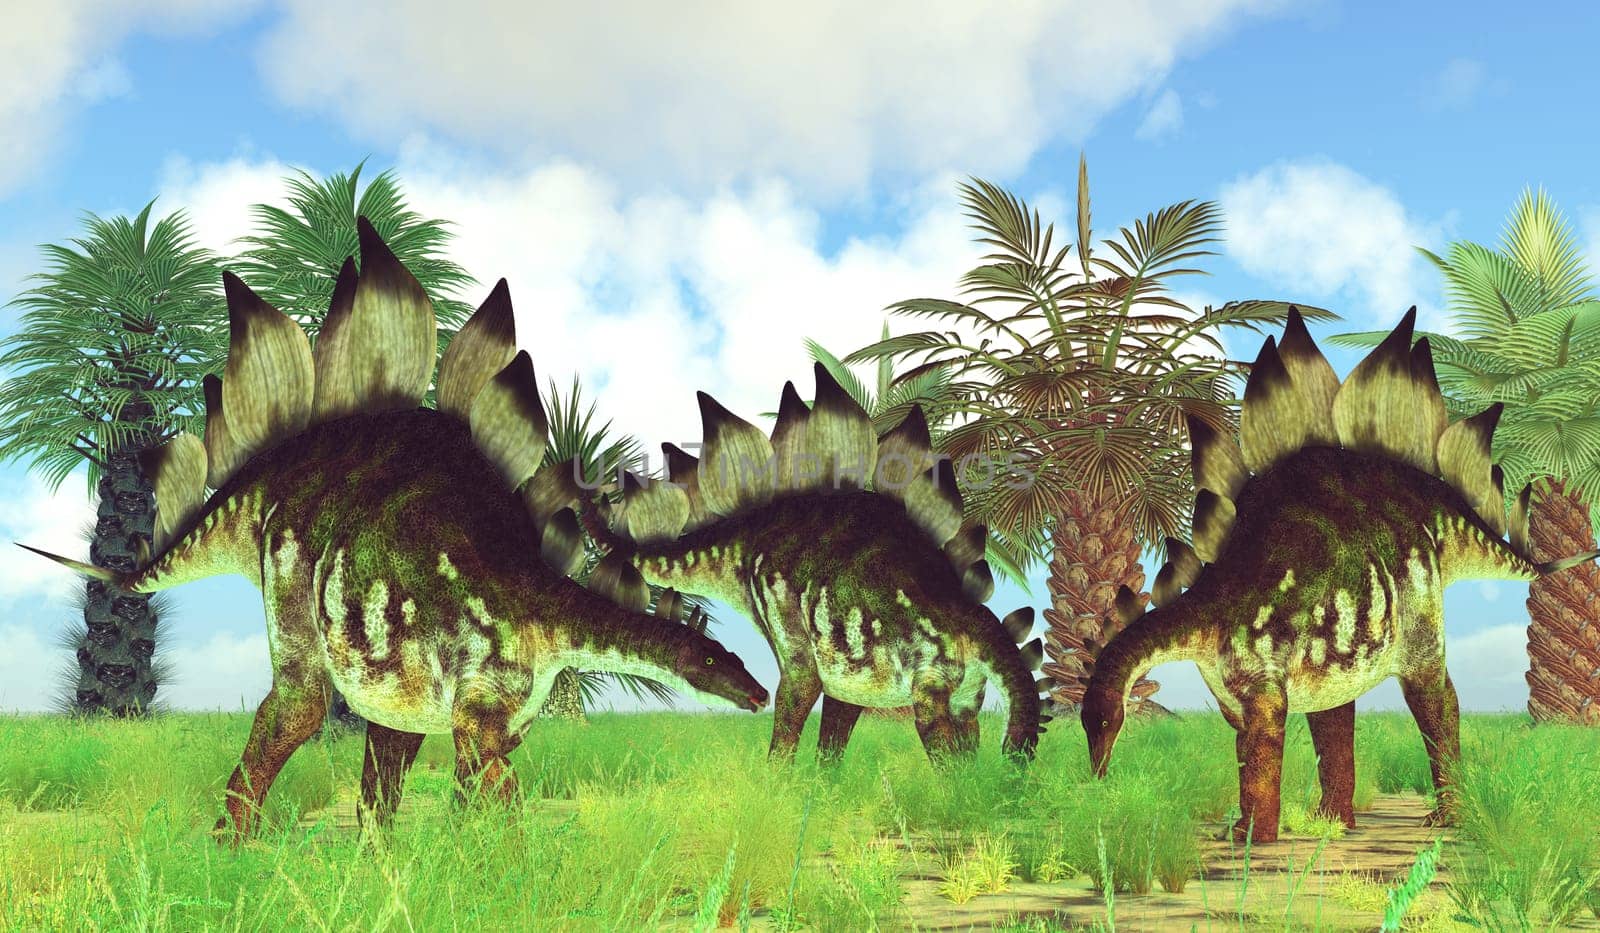 Stegosaurus Herd eating Plants by Catmando